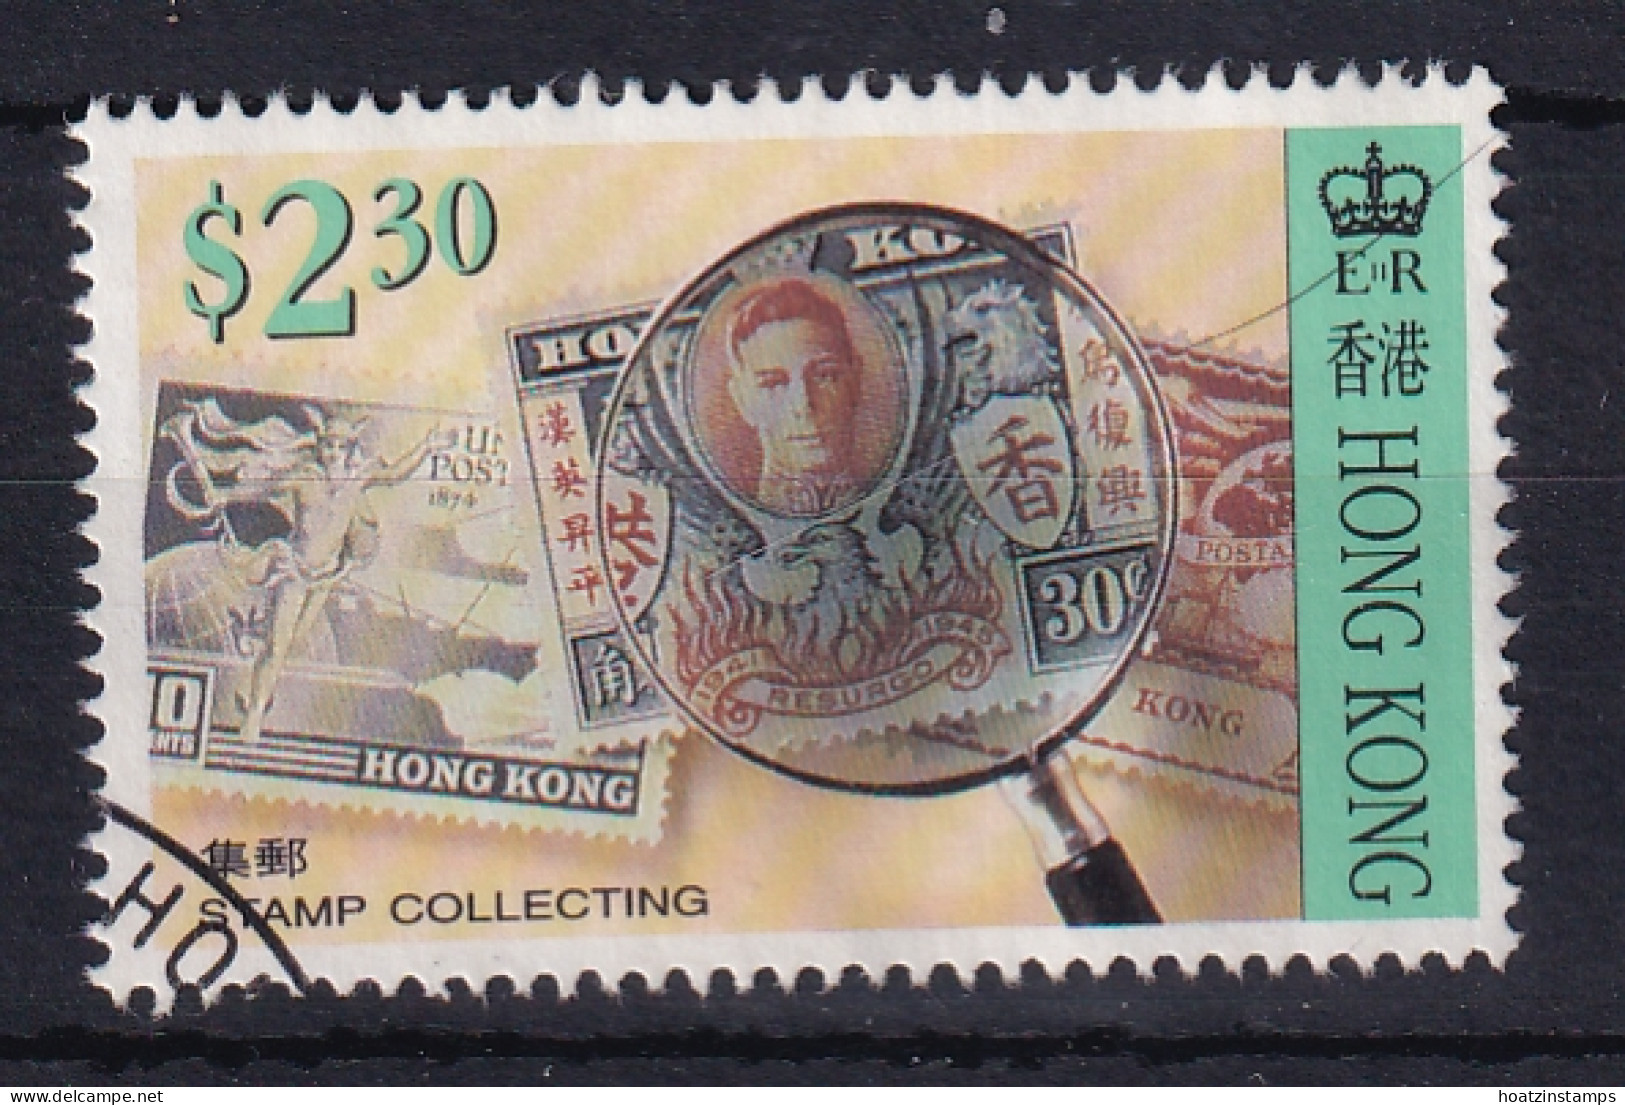 Hong Kong: 1992   Stamp Collecting   SG720    $2.30   Used  - Gebruikt